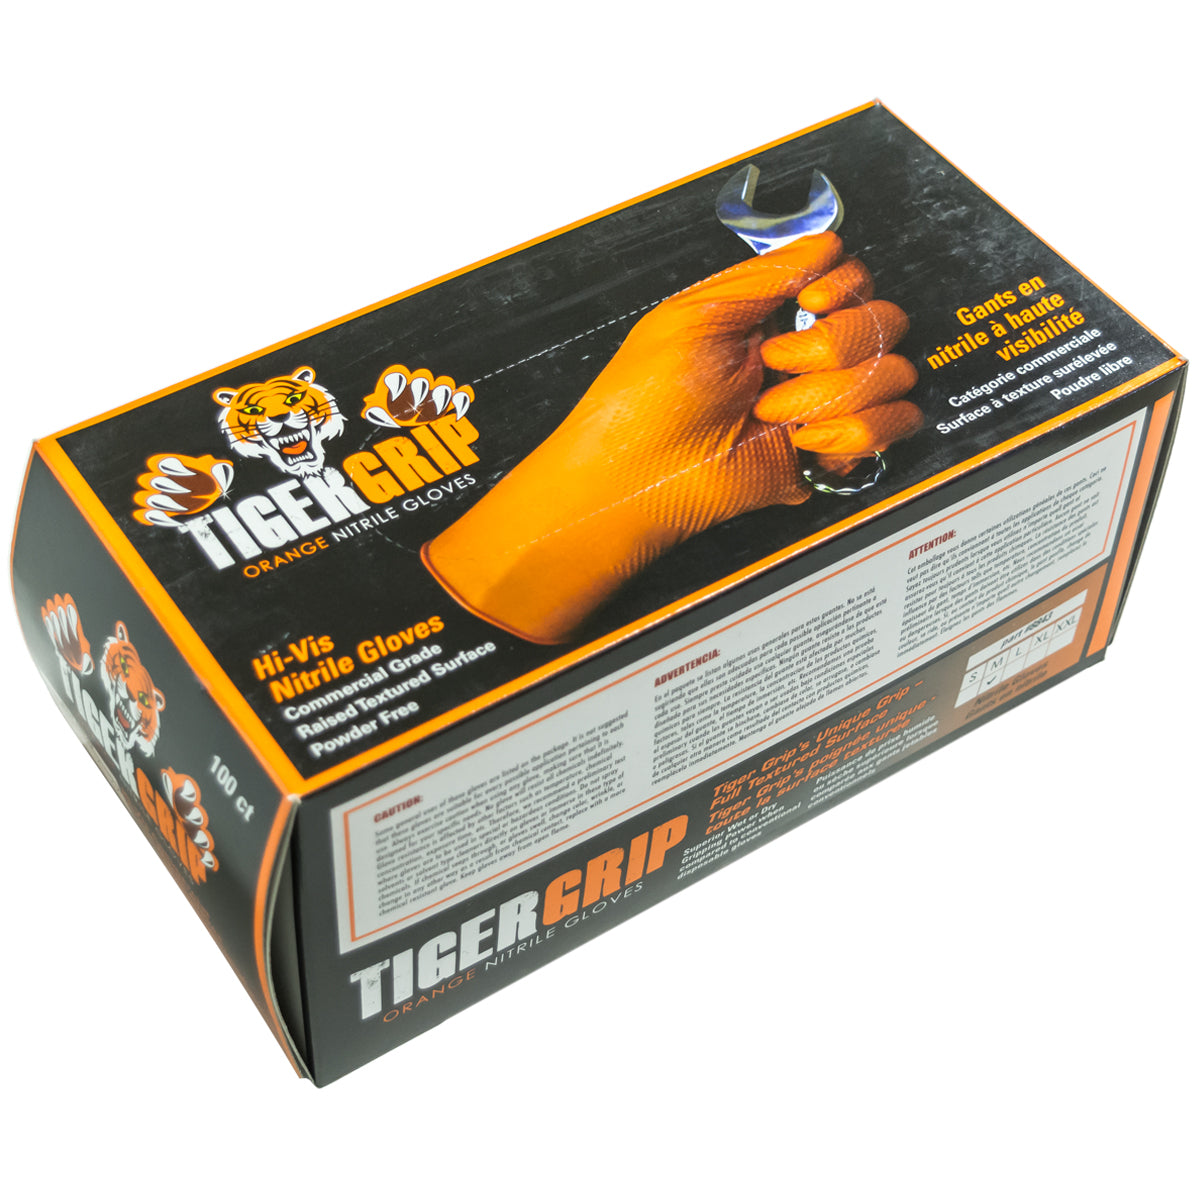 Eppco Enterprise 8843-M Tiger Grip Guantes de nitrilo naranja